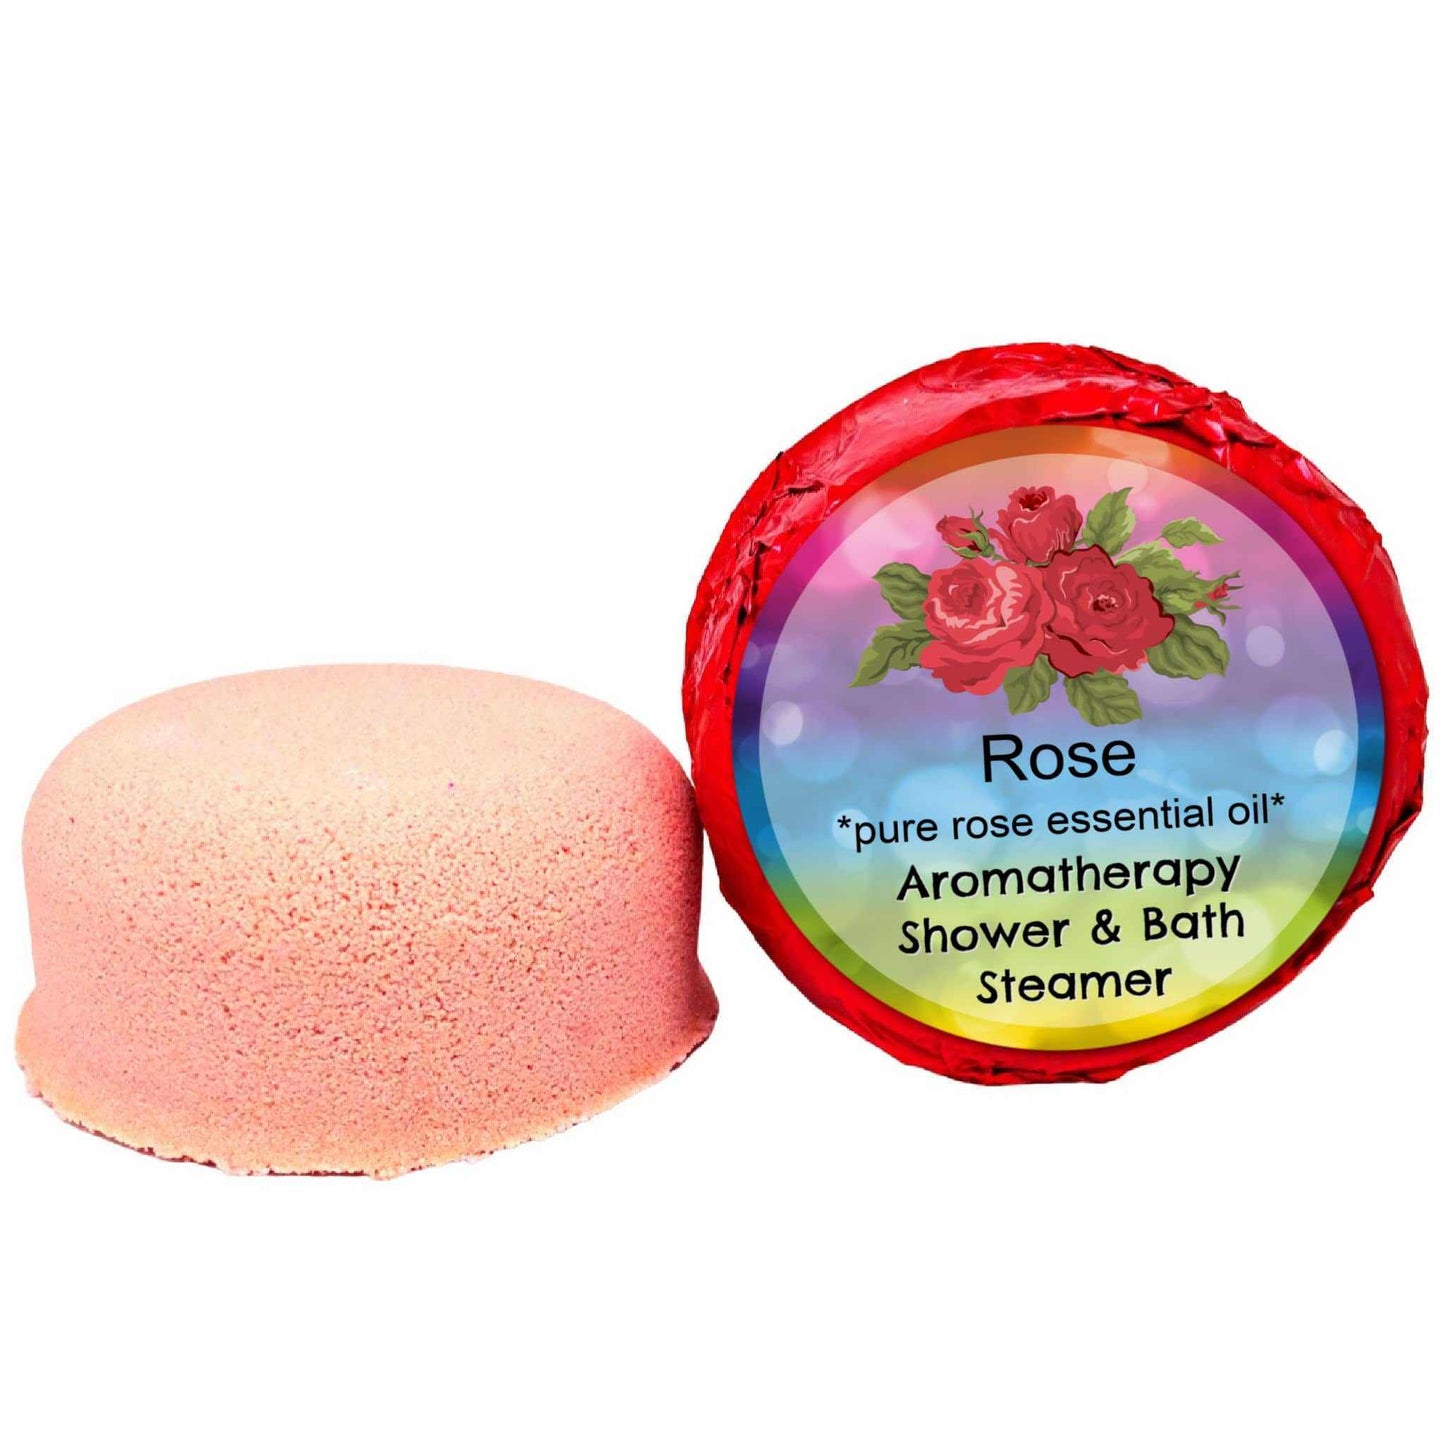 Rose Aromatherapy Shower Steamer